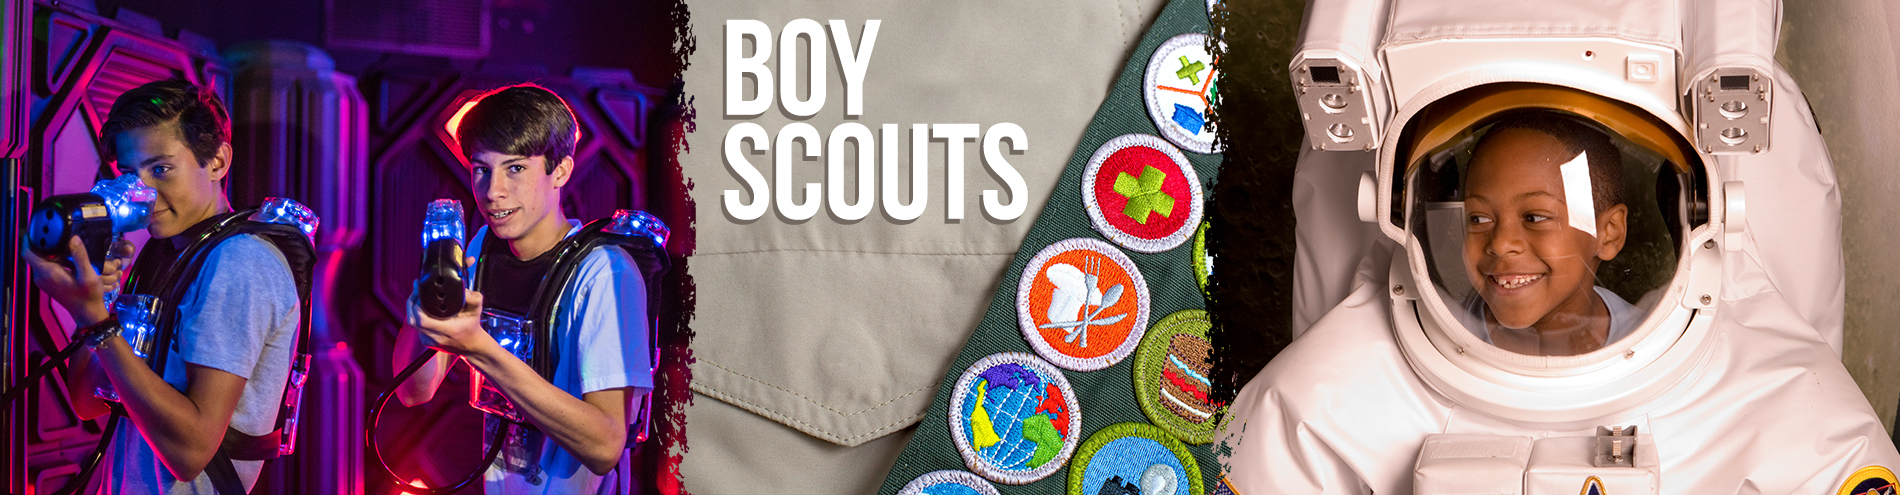 Boy Scout Program Web Slider